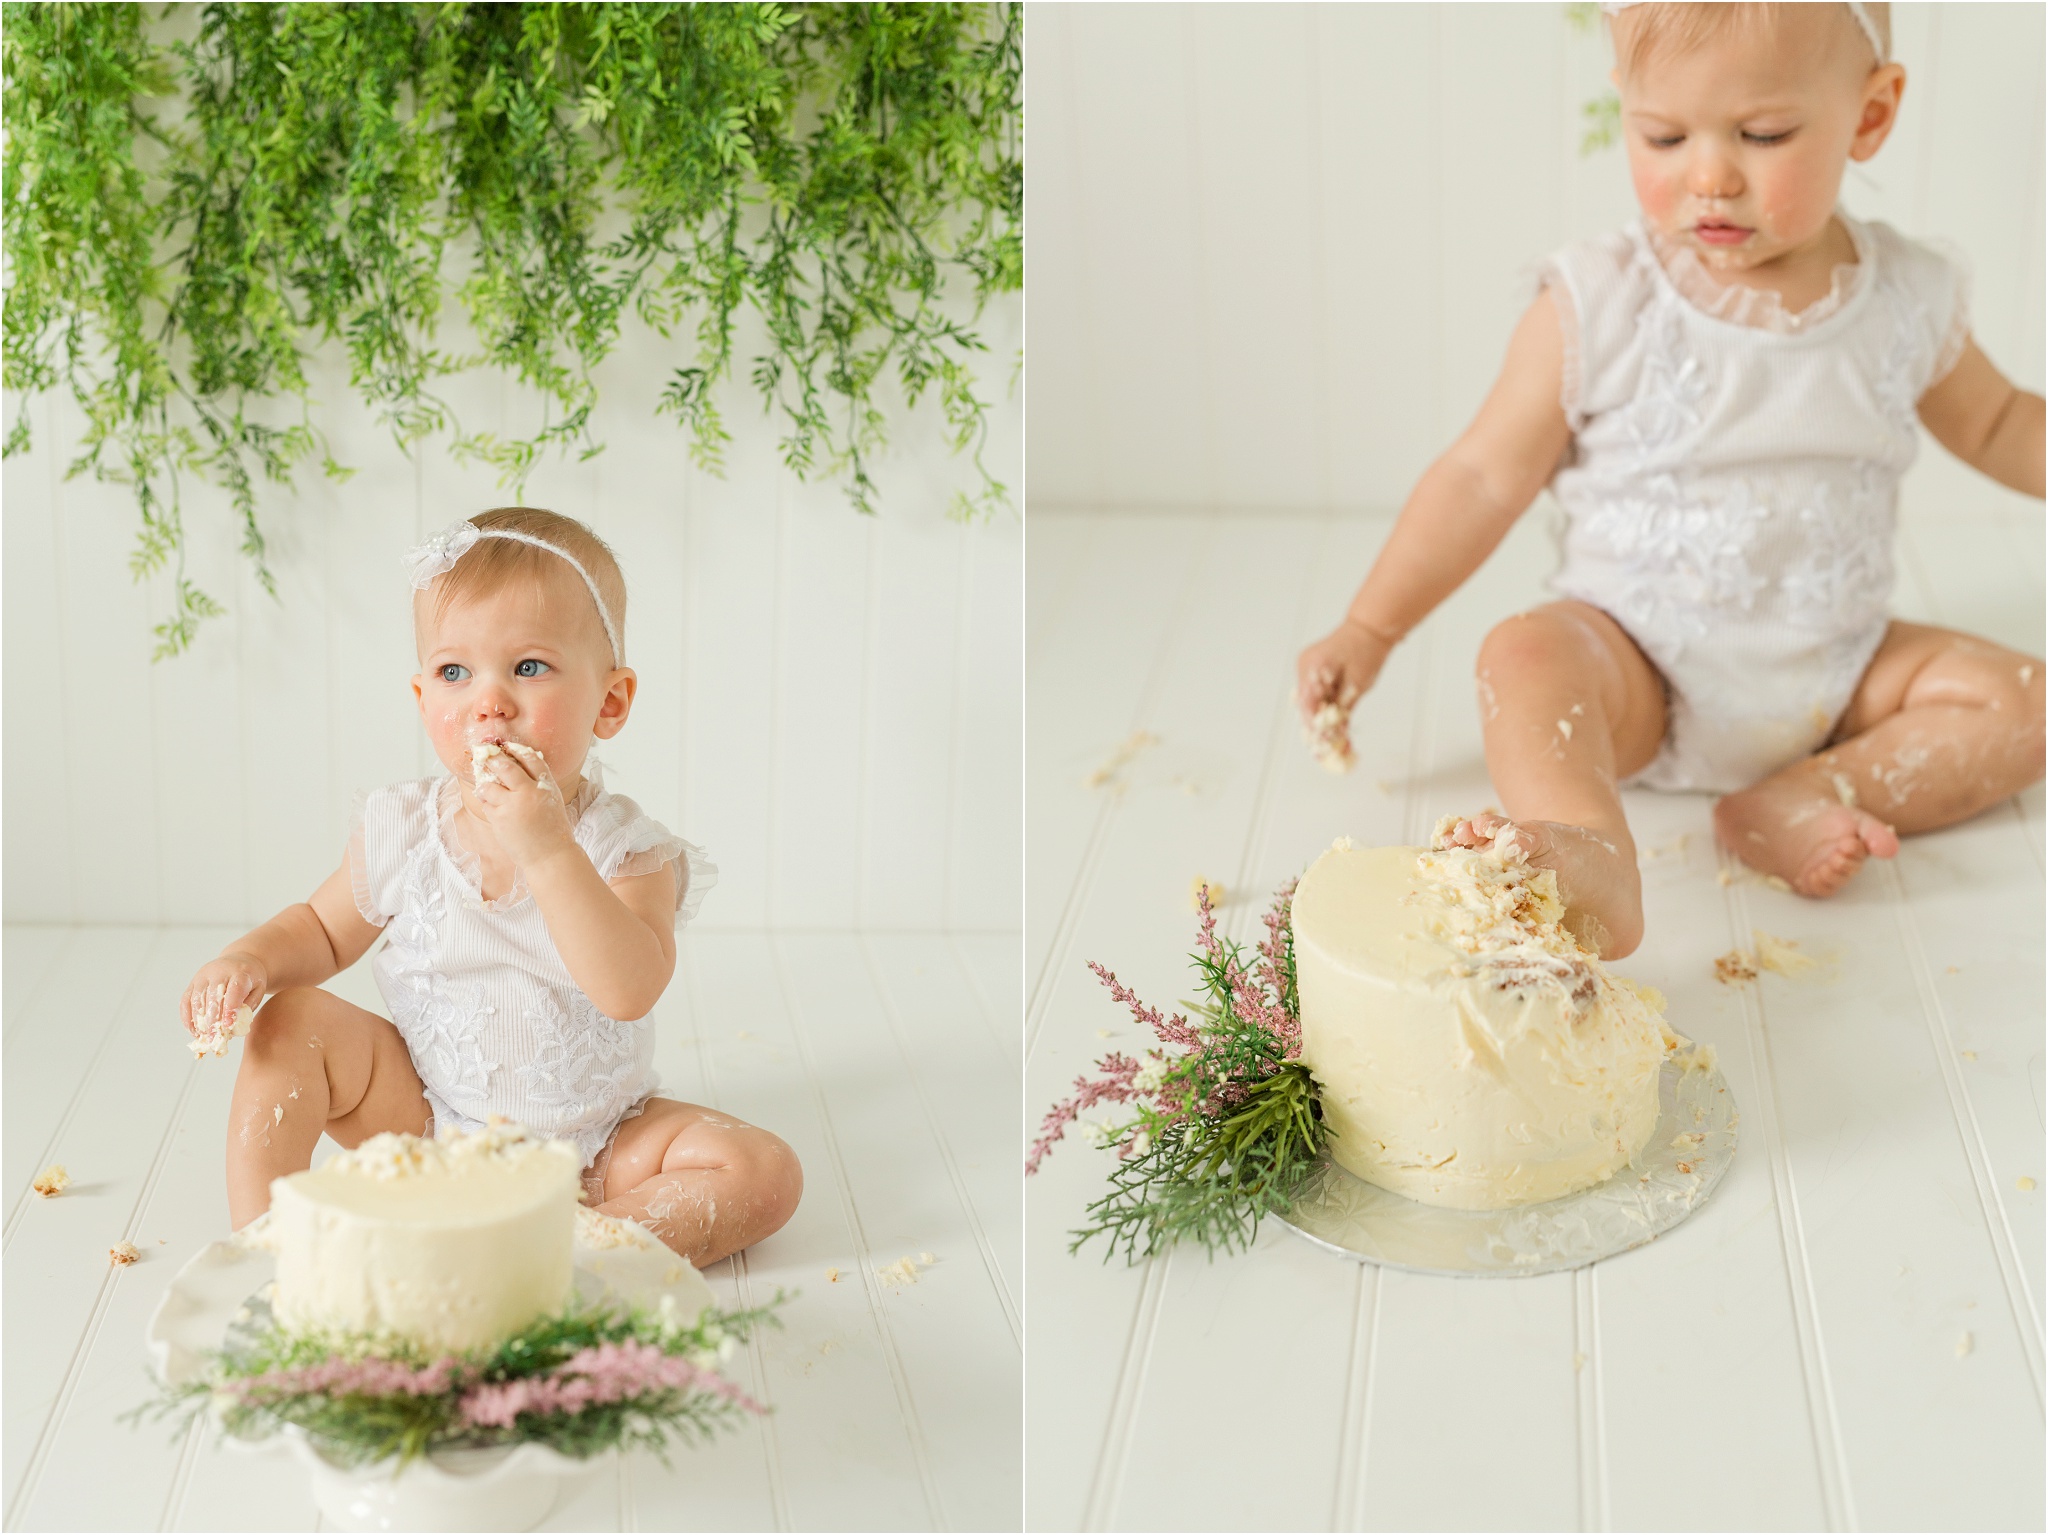 cake smash photos, edmonton family photographer, mommy and me, first birthday photos